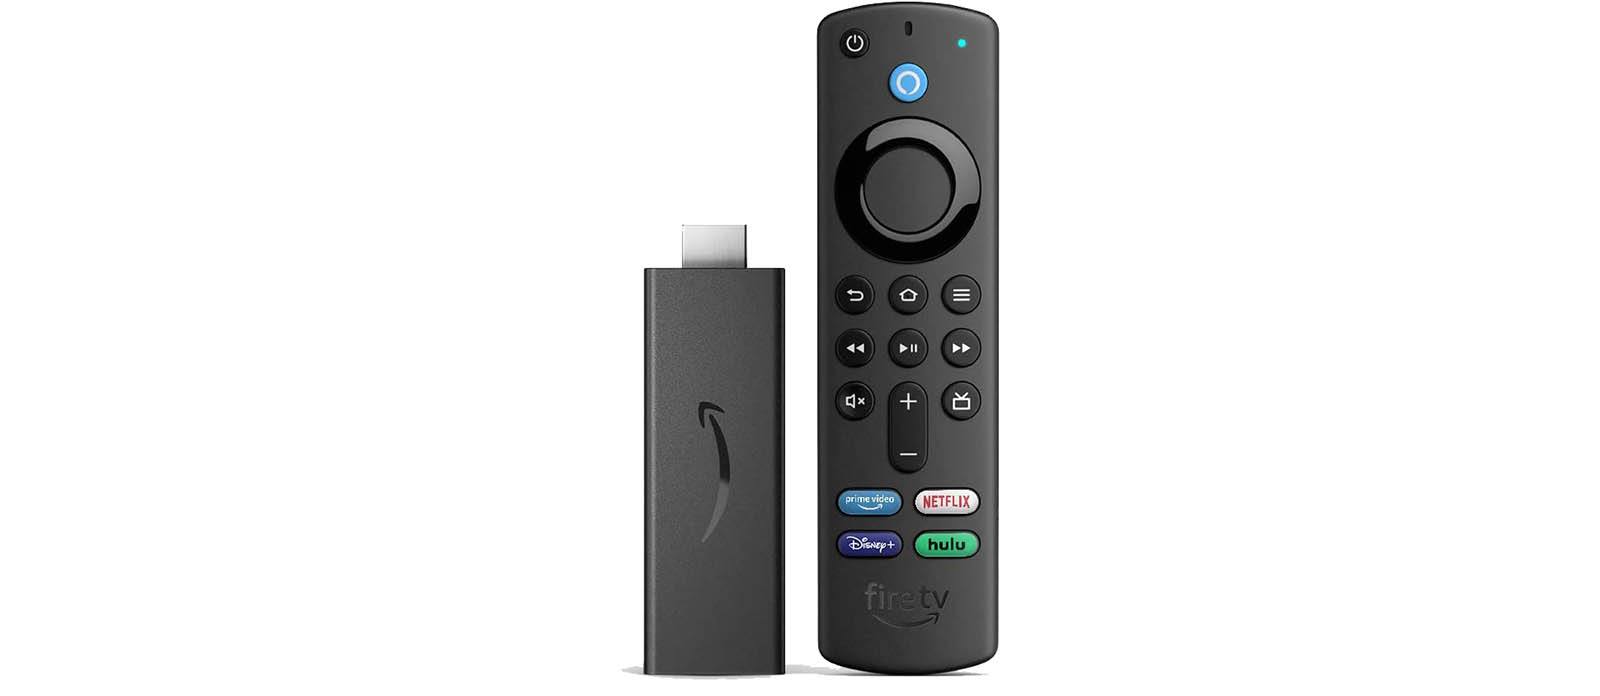 Photo of Amazon's Fire TV Stick and Alexa Voice Remote